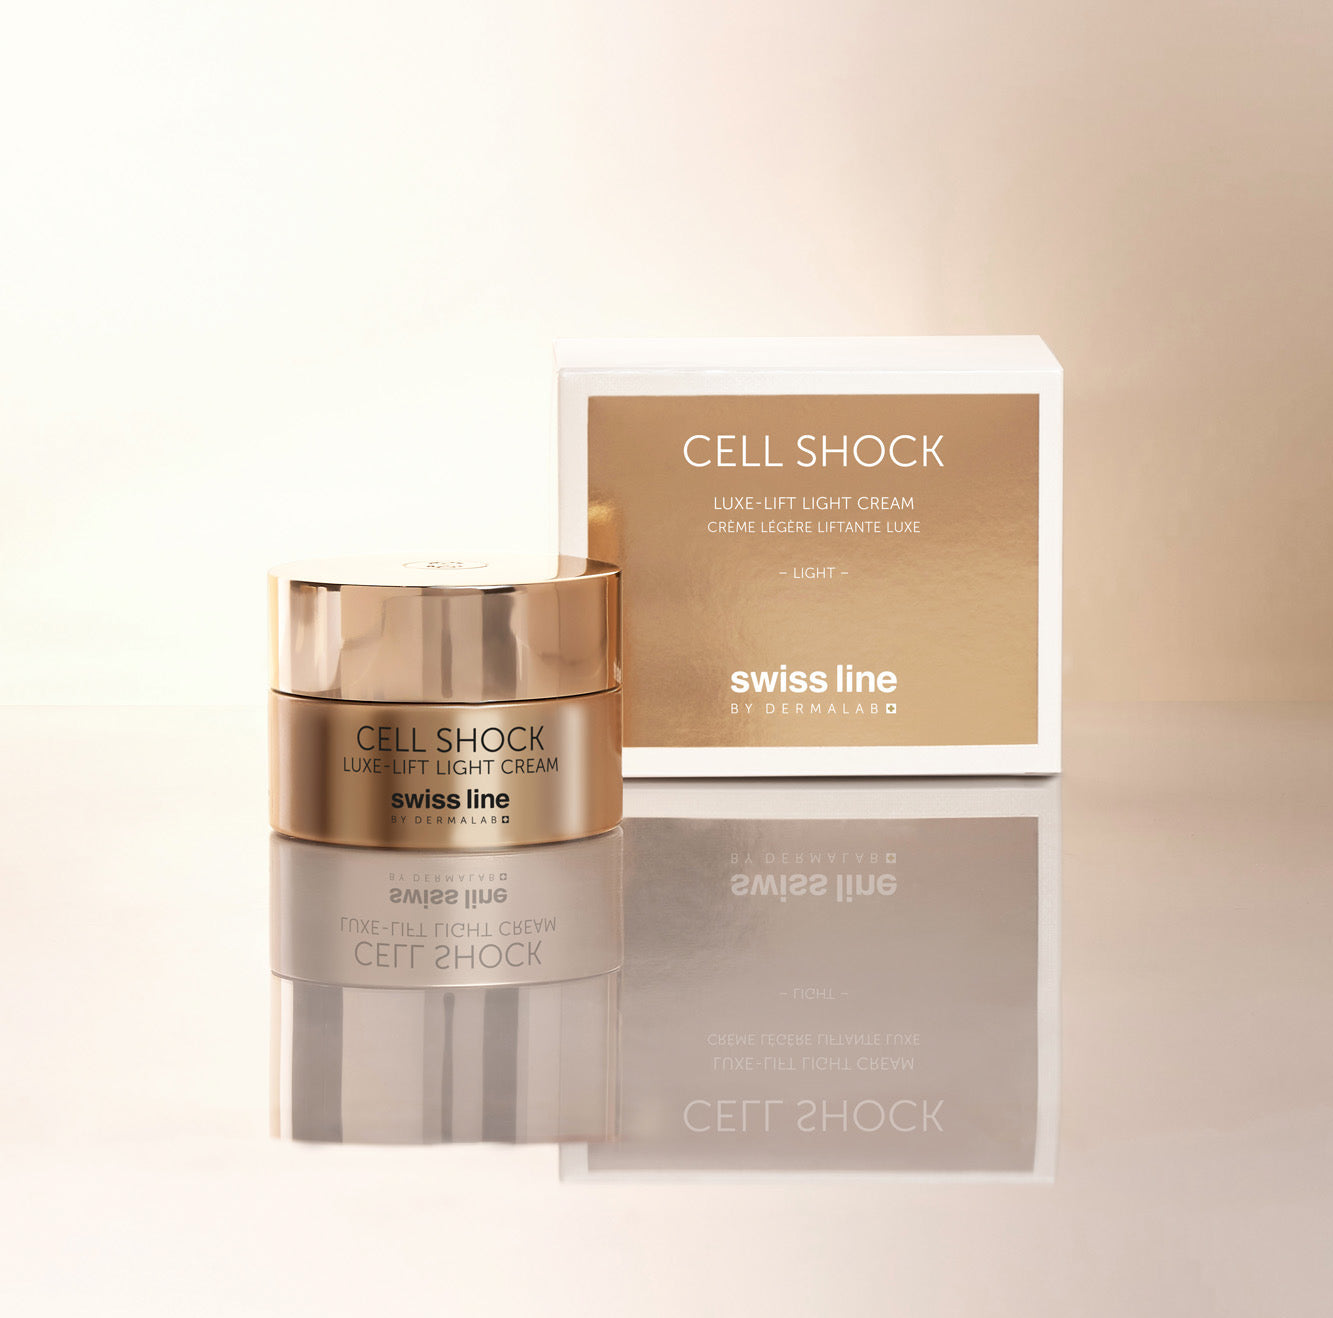 Cell Shock Luxe-Lift Light Cream (50ml)